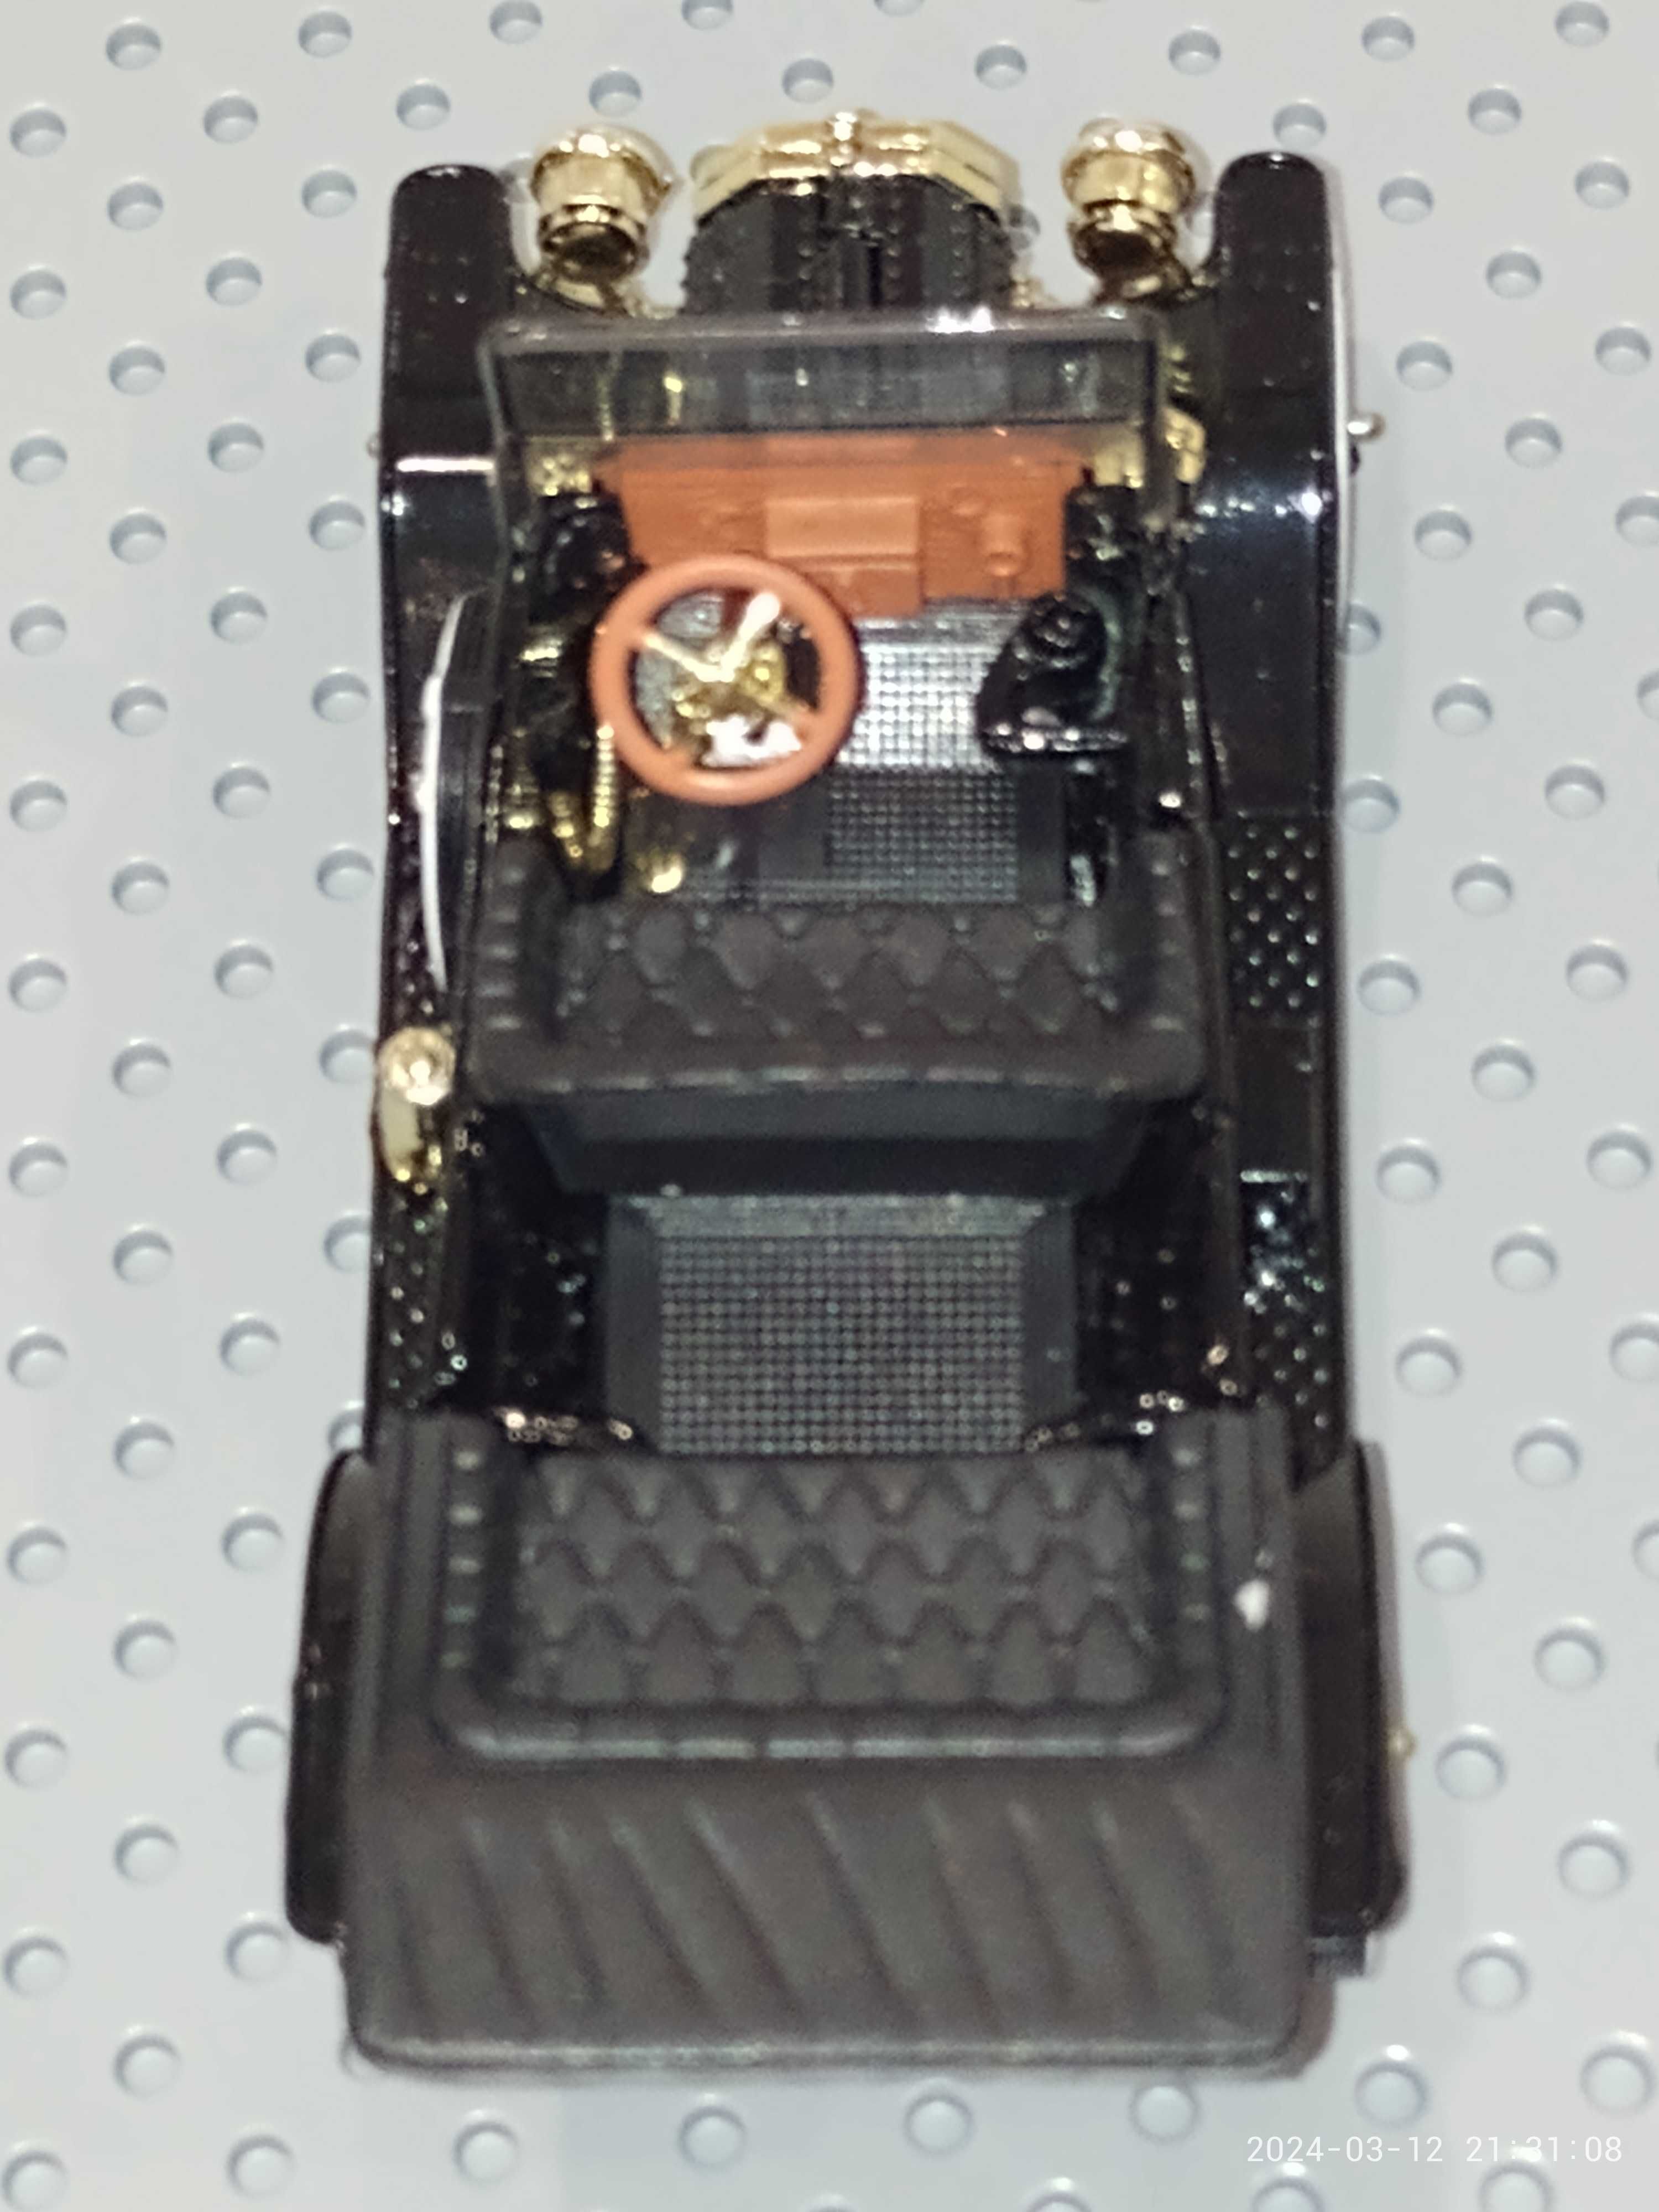 FORD T 1910 Model 1:32 z National Motor Museum Mint - UNIKAT